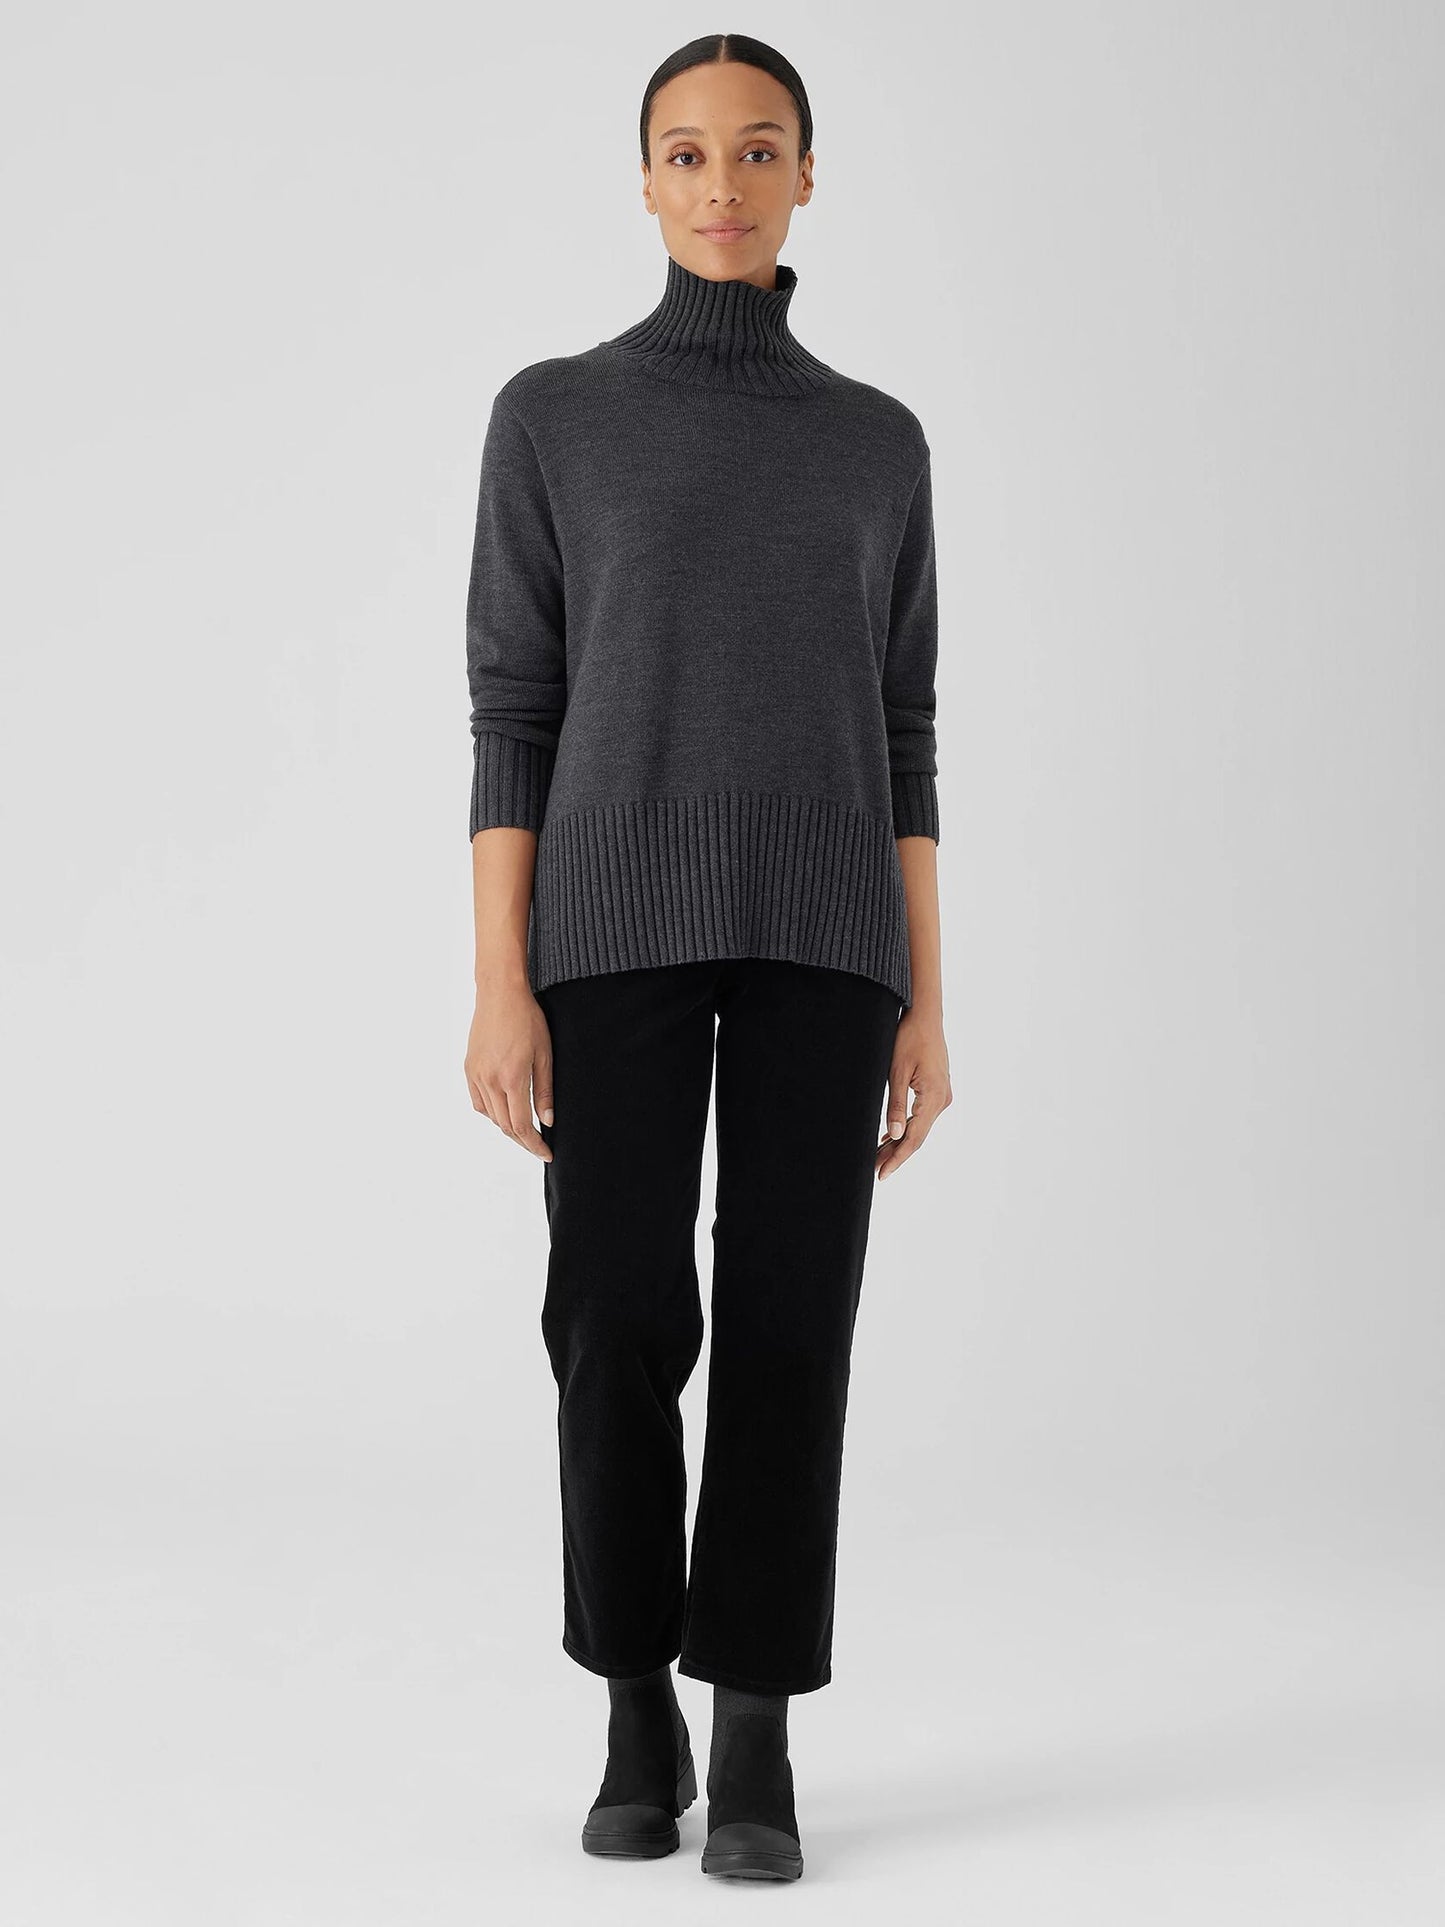 Eileen Fisher Merino Wool Turtleneck Sweater